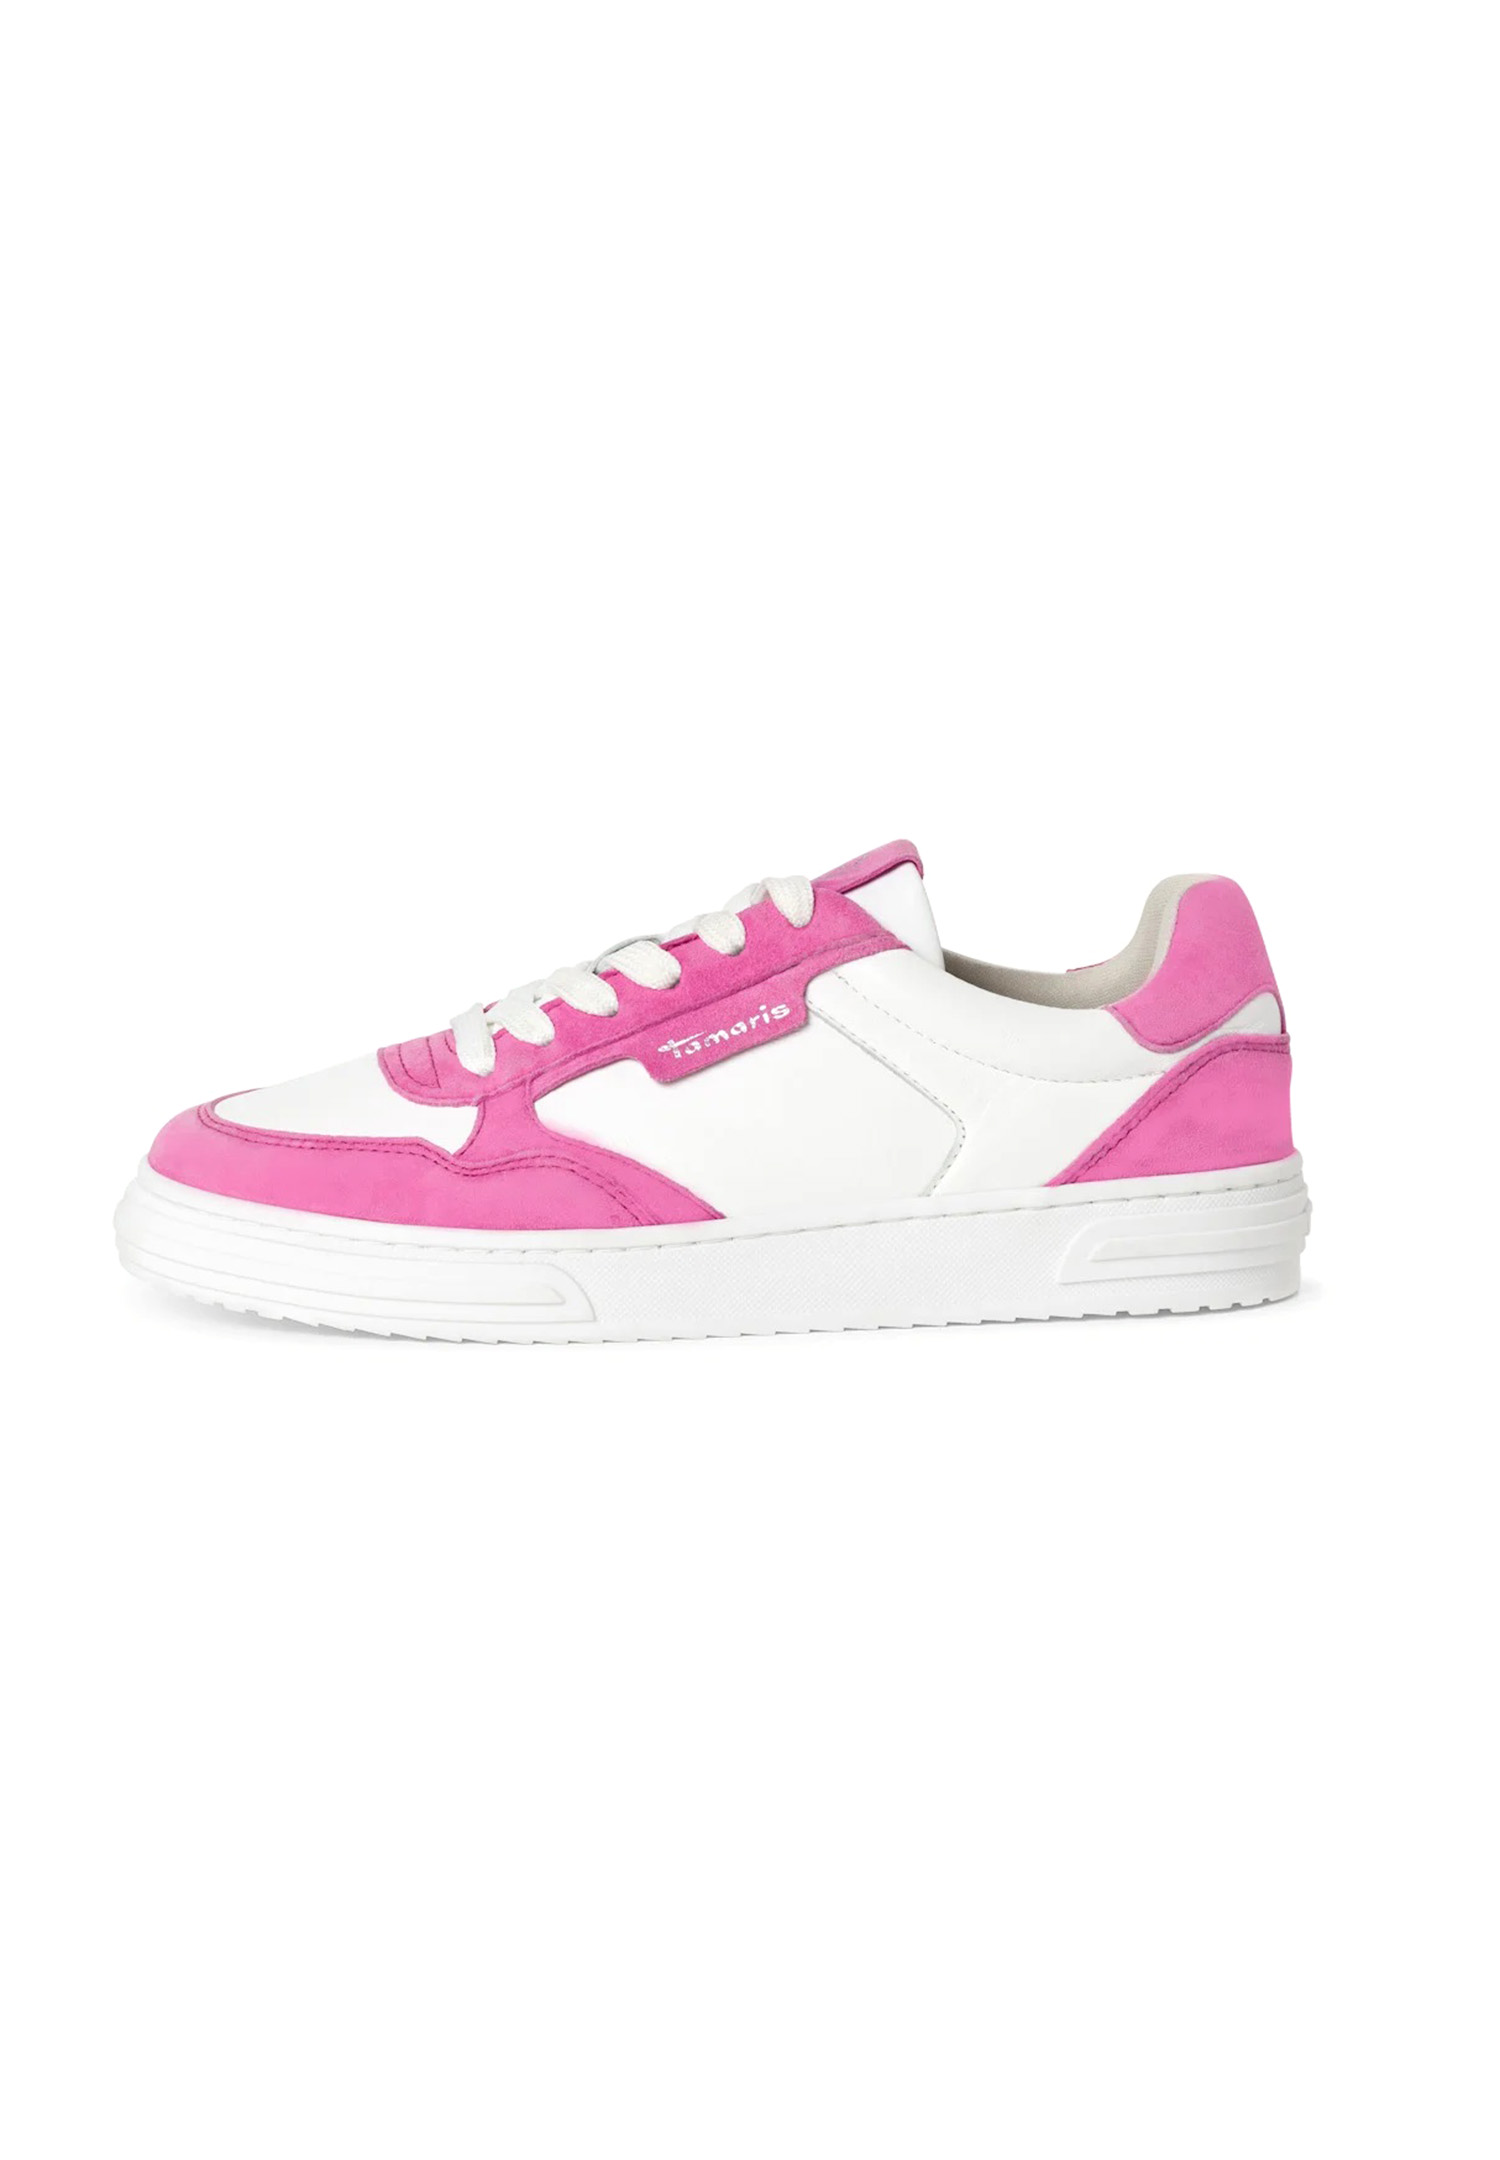 Tamaris 1-23617-42 510 Damen Low Top Sneaker Frauen Schuhe M2361742 Pink